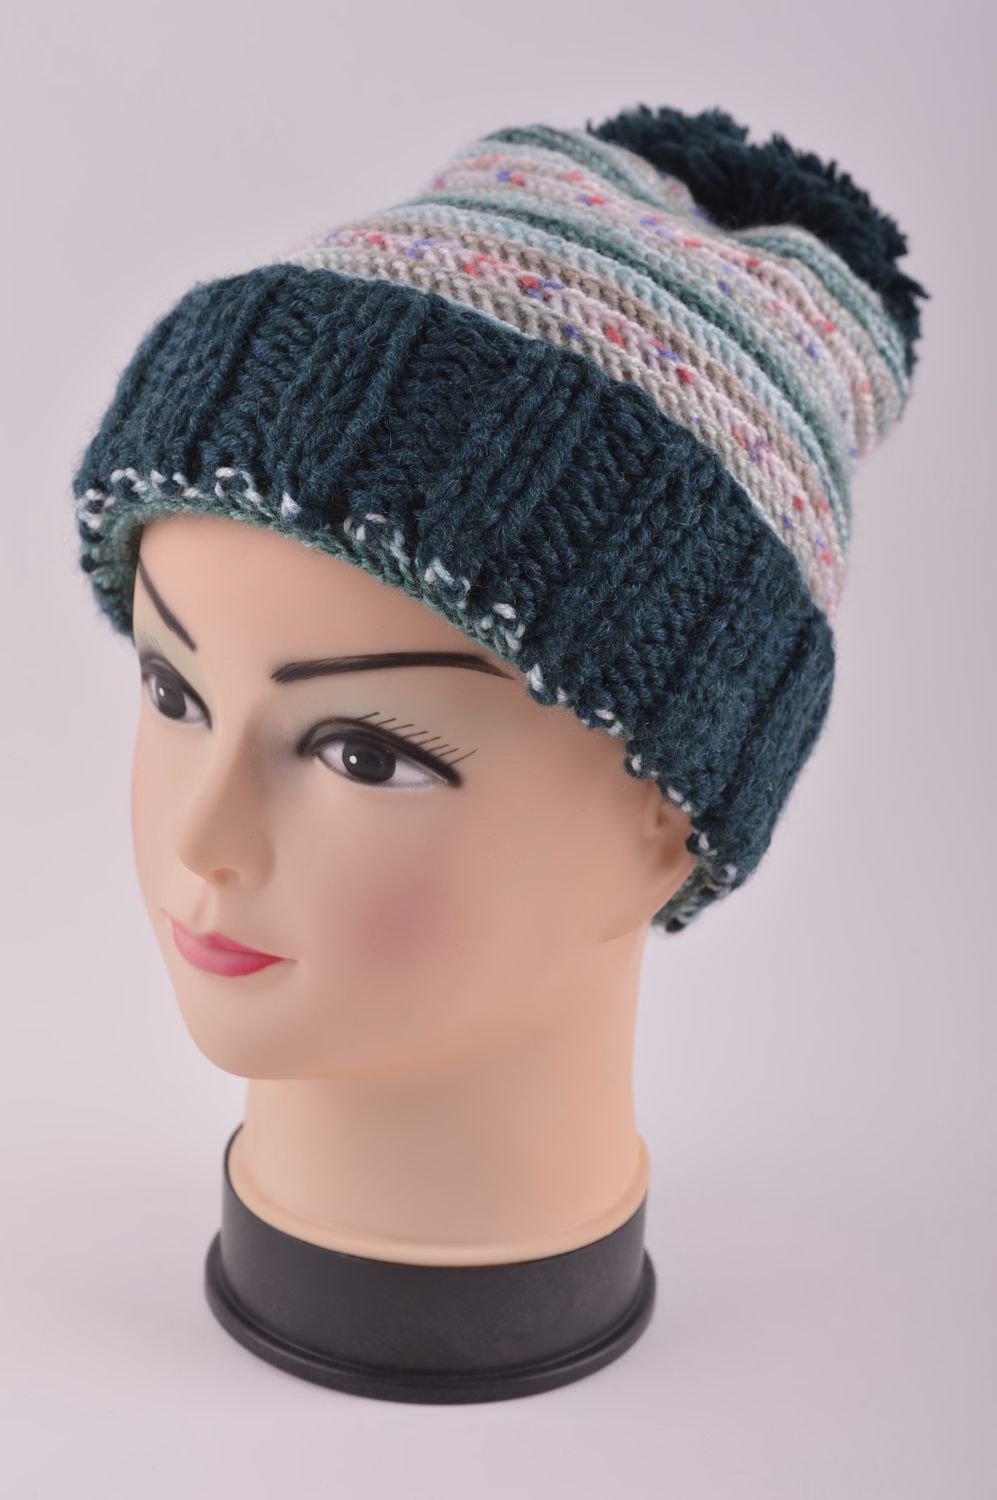 Handmade knitted hat designer hat for women winter accessories for girls photo 2